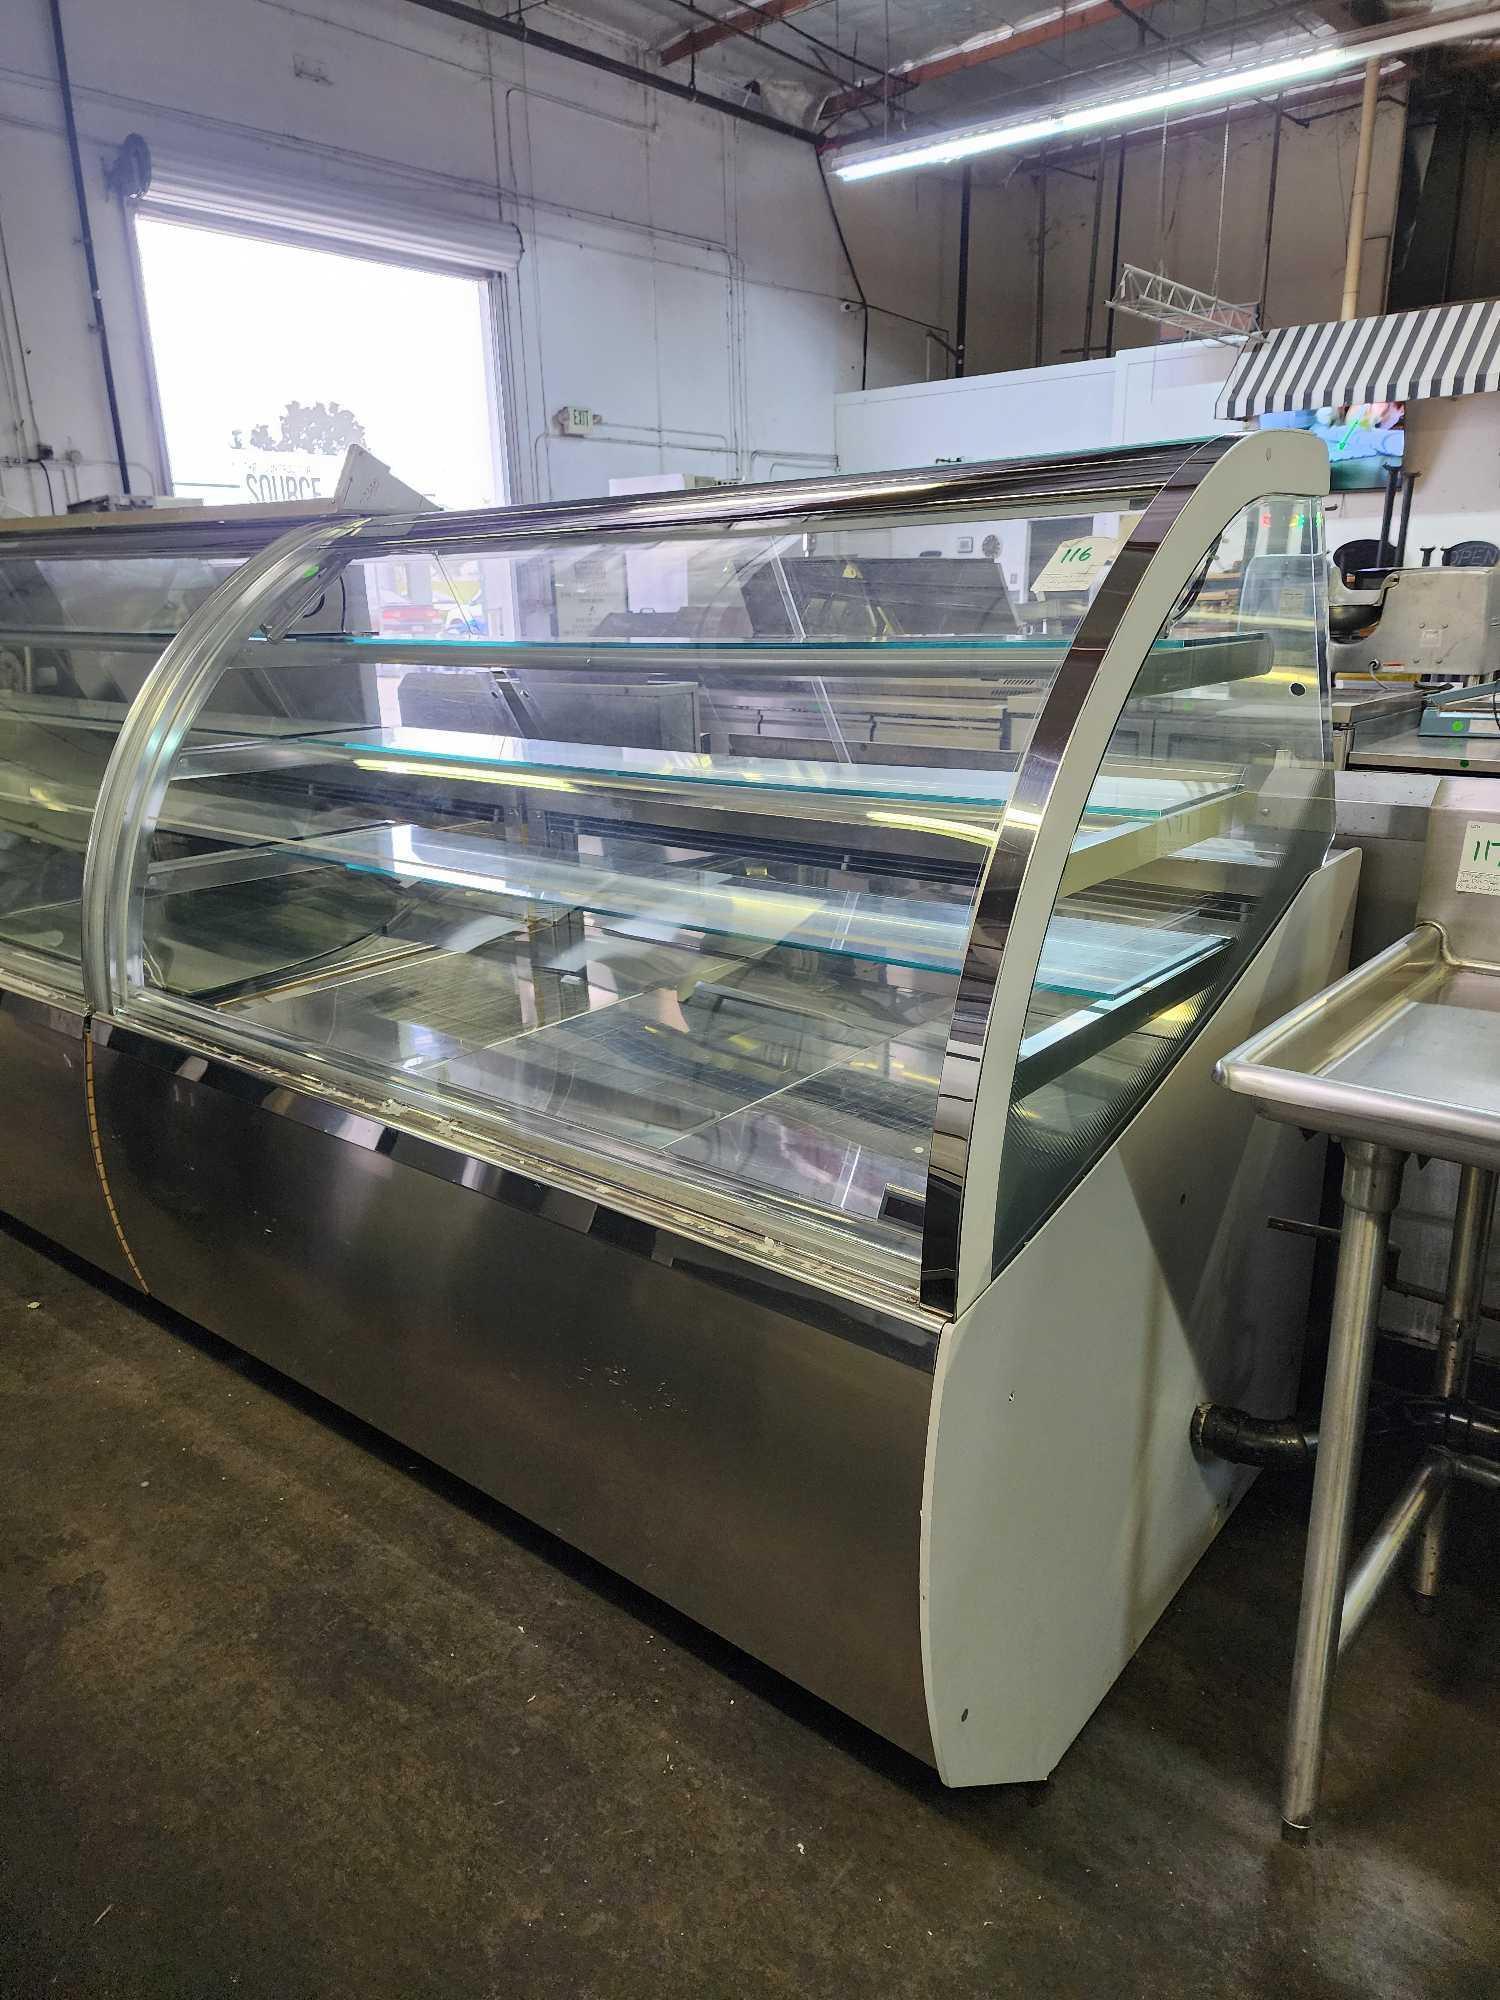 Oscartek 128 in. Split Curved Glass Refrigerated Display Case